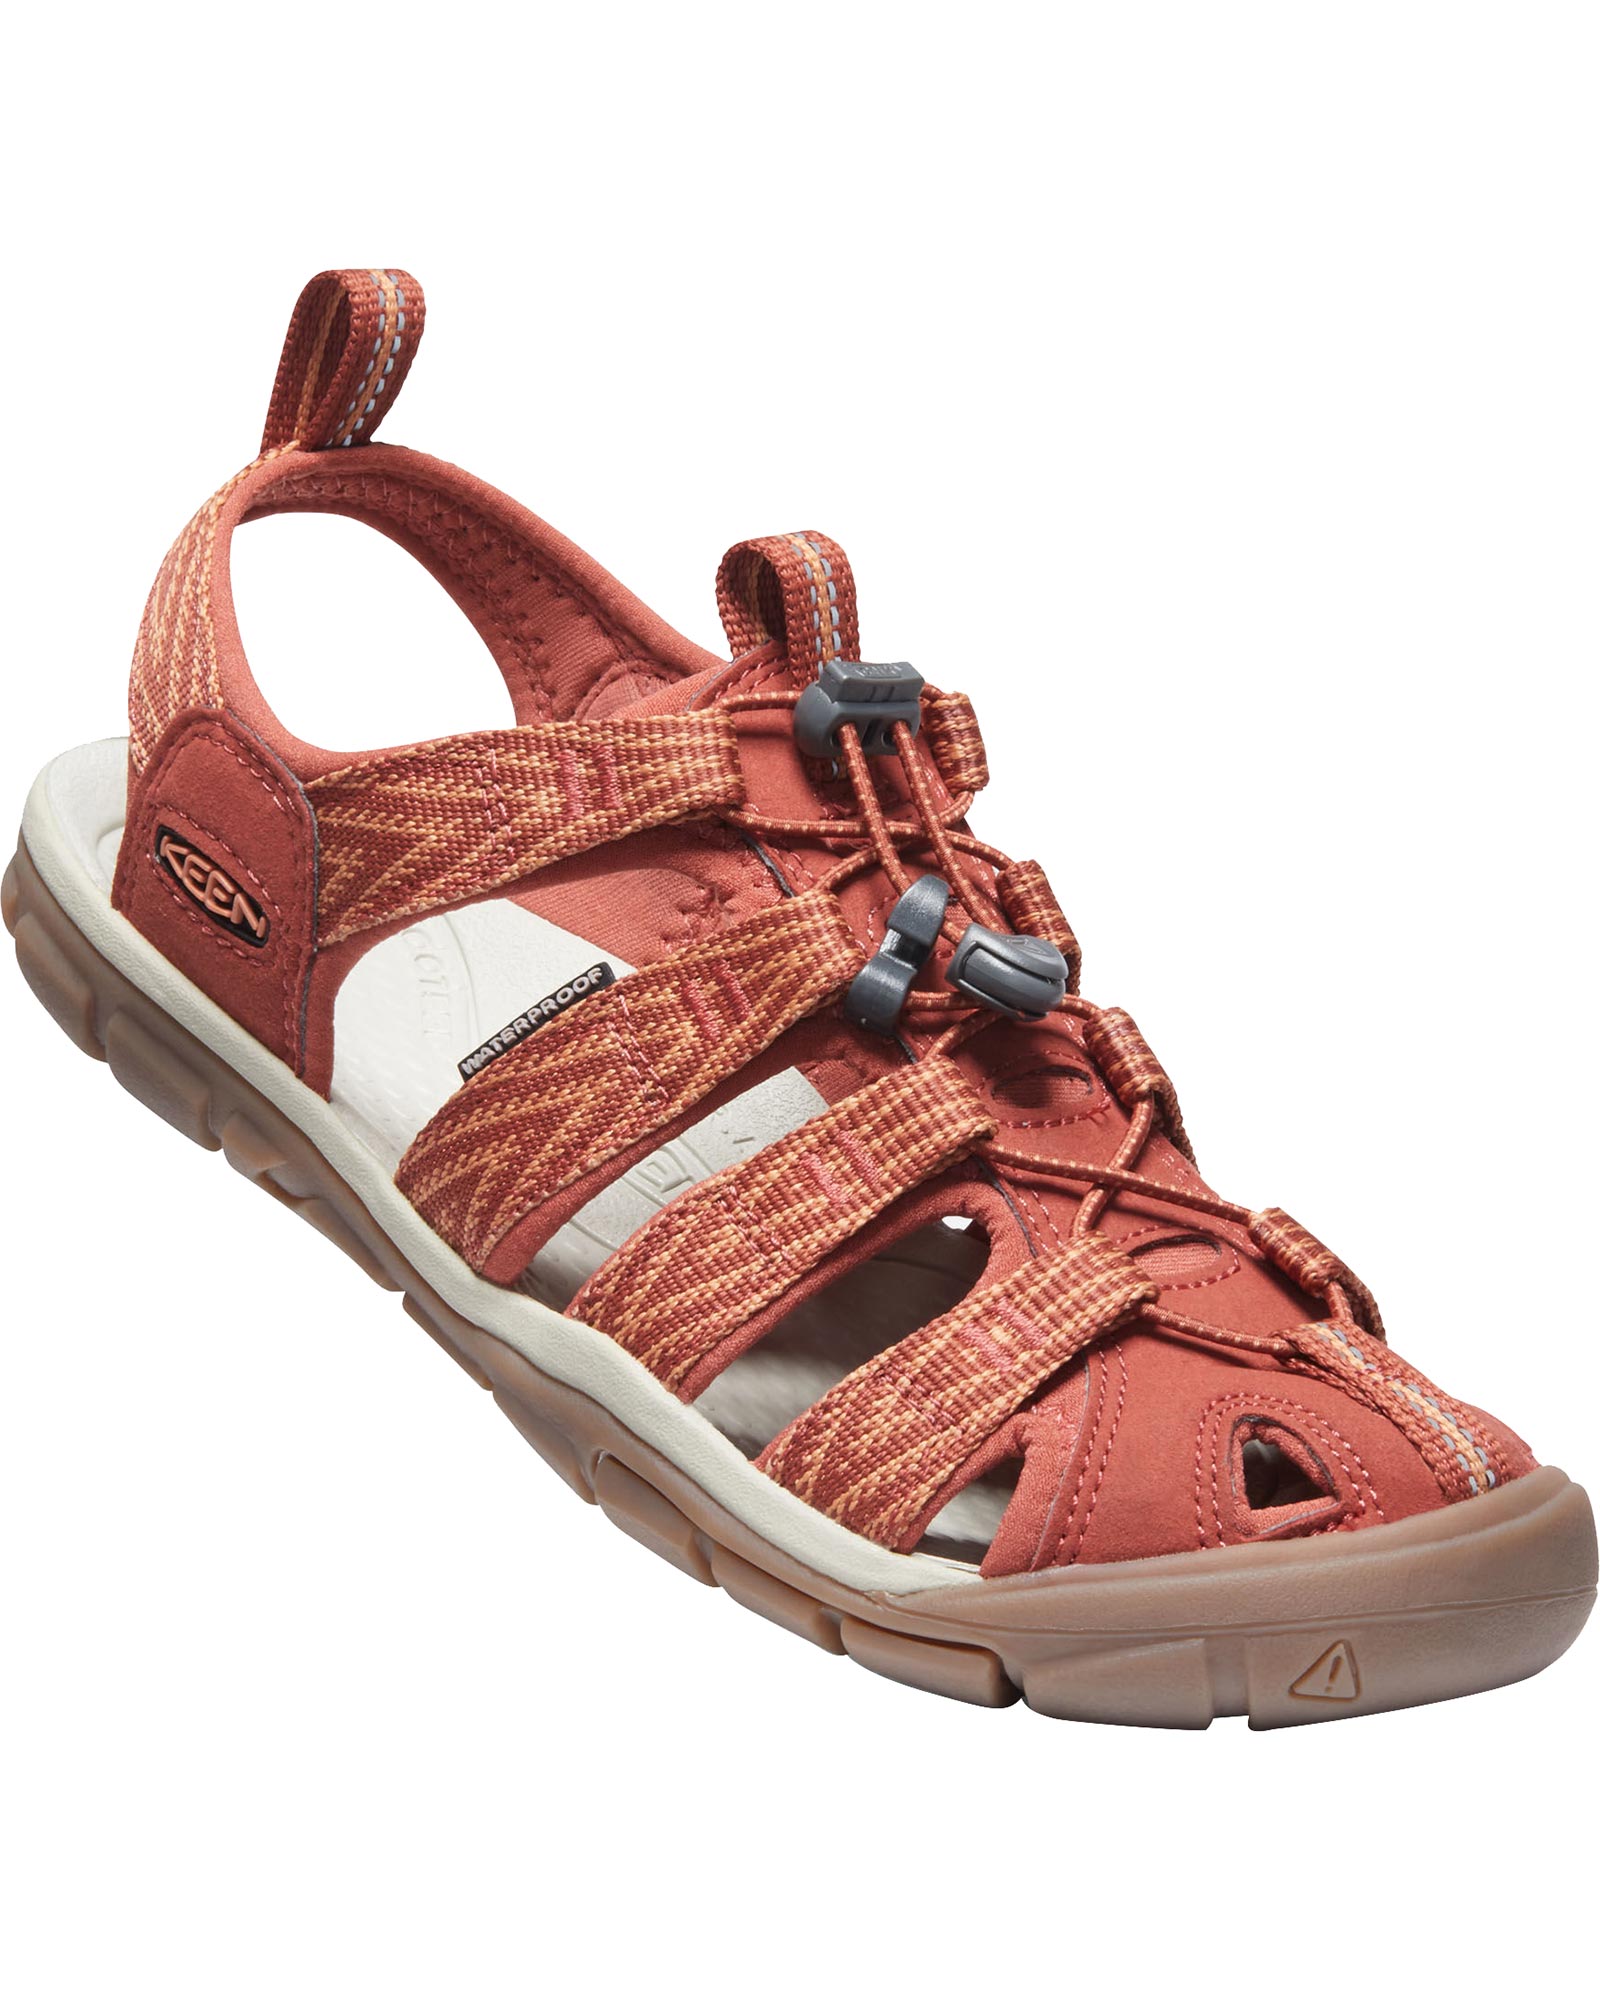 Keen Clearwater CNX Women’s Sandals - Brick Dust/Pheasant UK 5.5